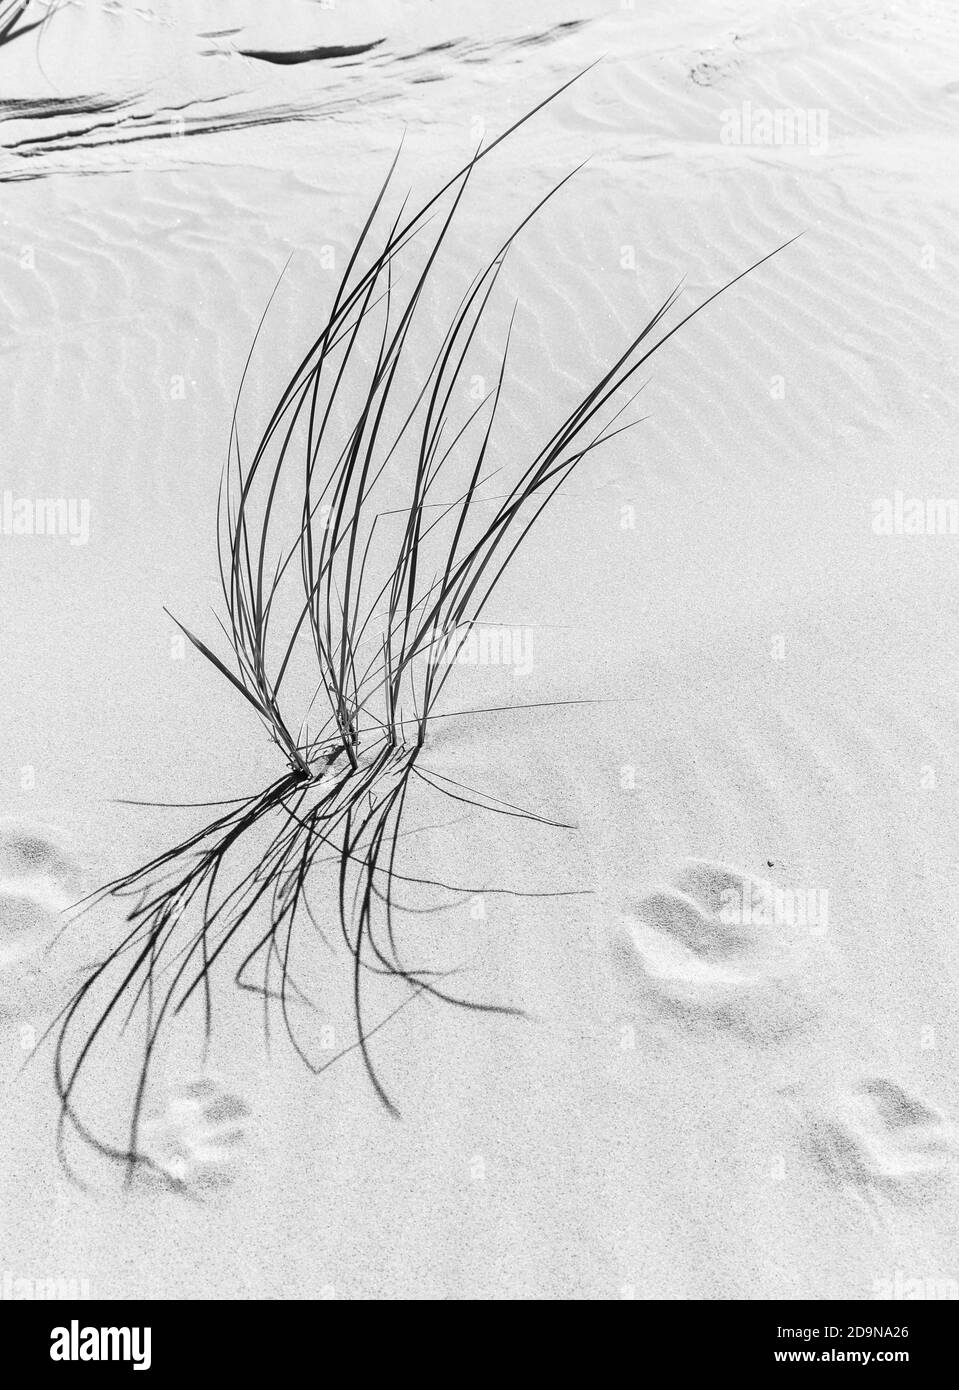 Grass and animal tracks on a sandy beach Stock Photo